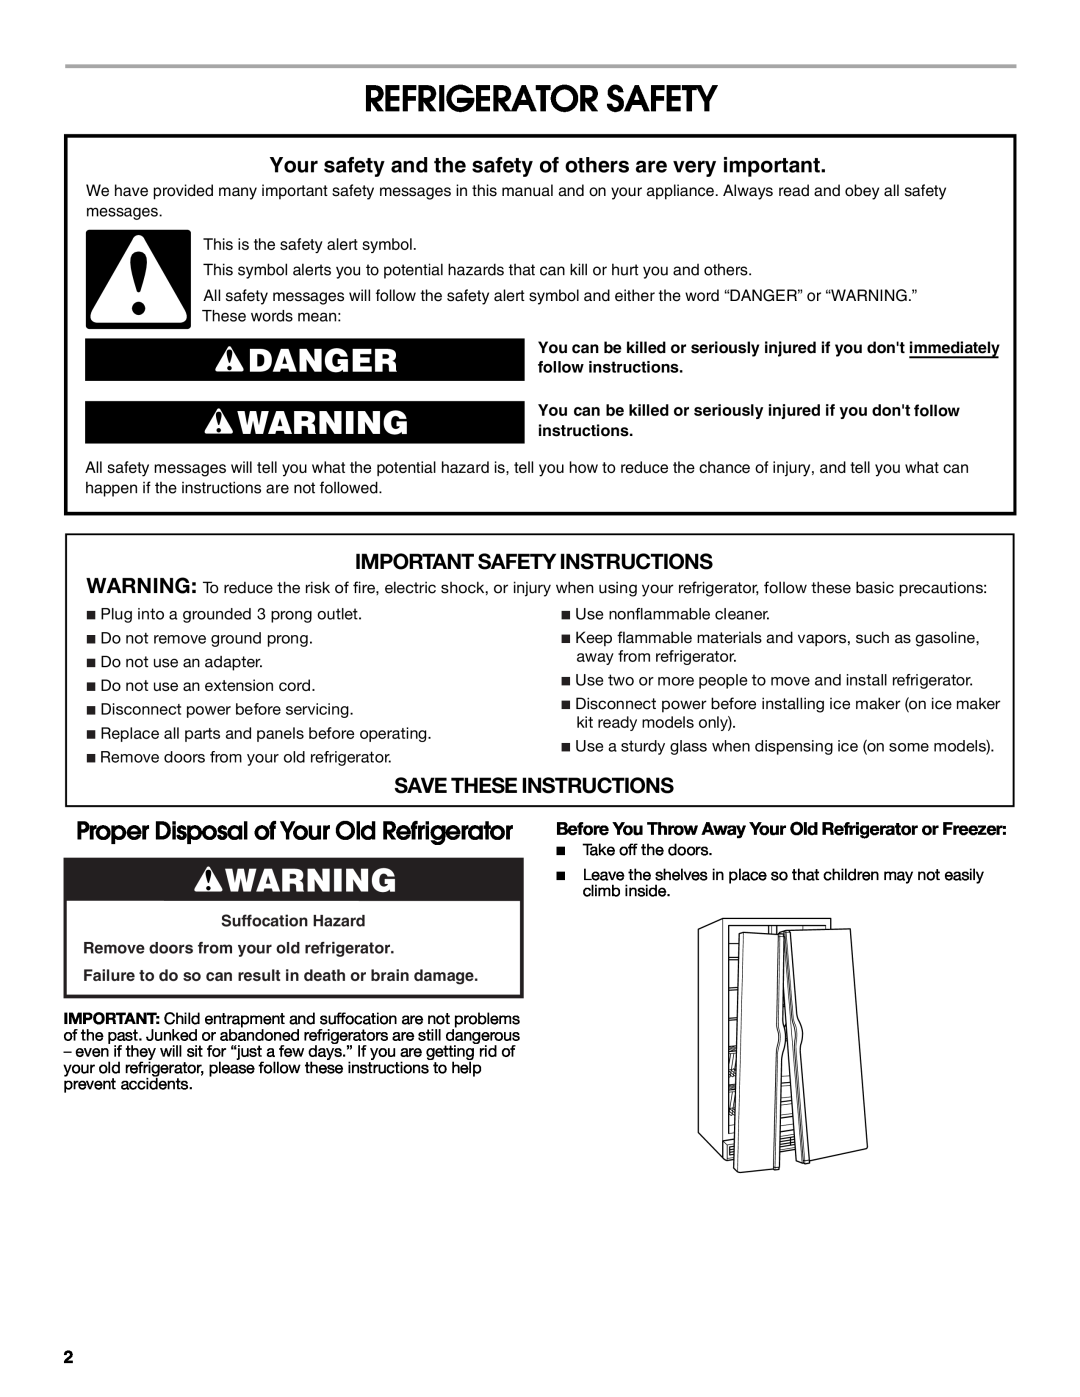 Estate 2318600 Refrigerator Safety, Danger, Proper Disposal of Your Old Refrigerator, Important Safety Instructions 